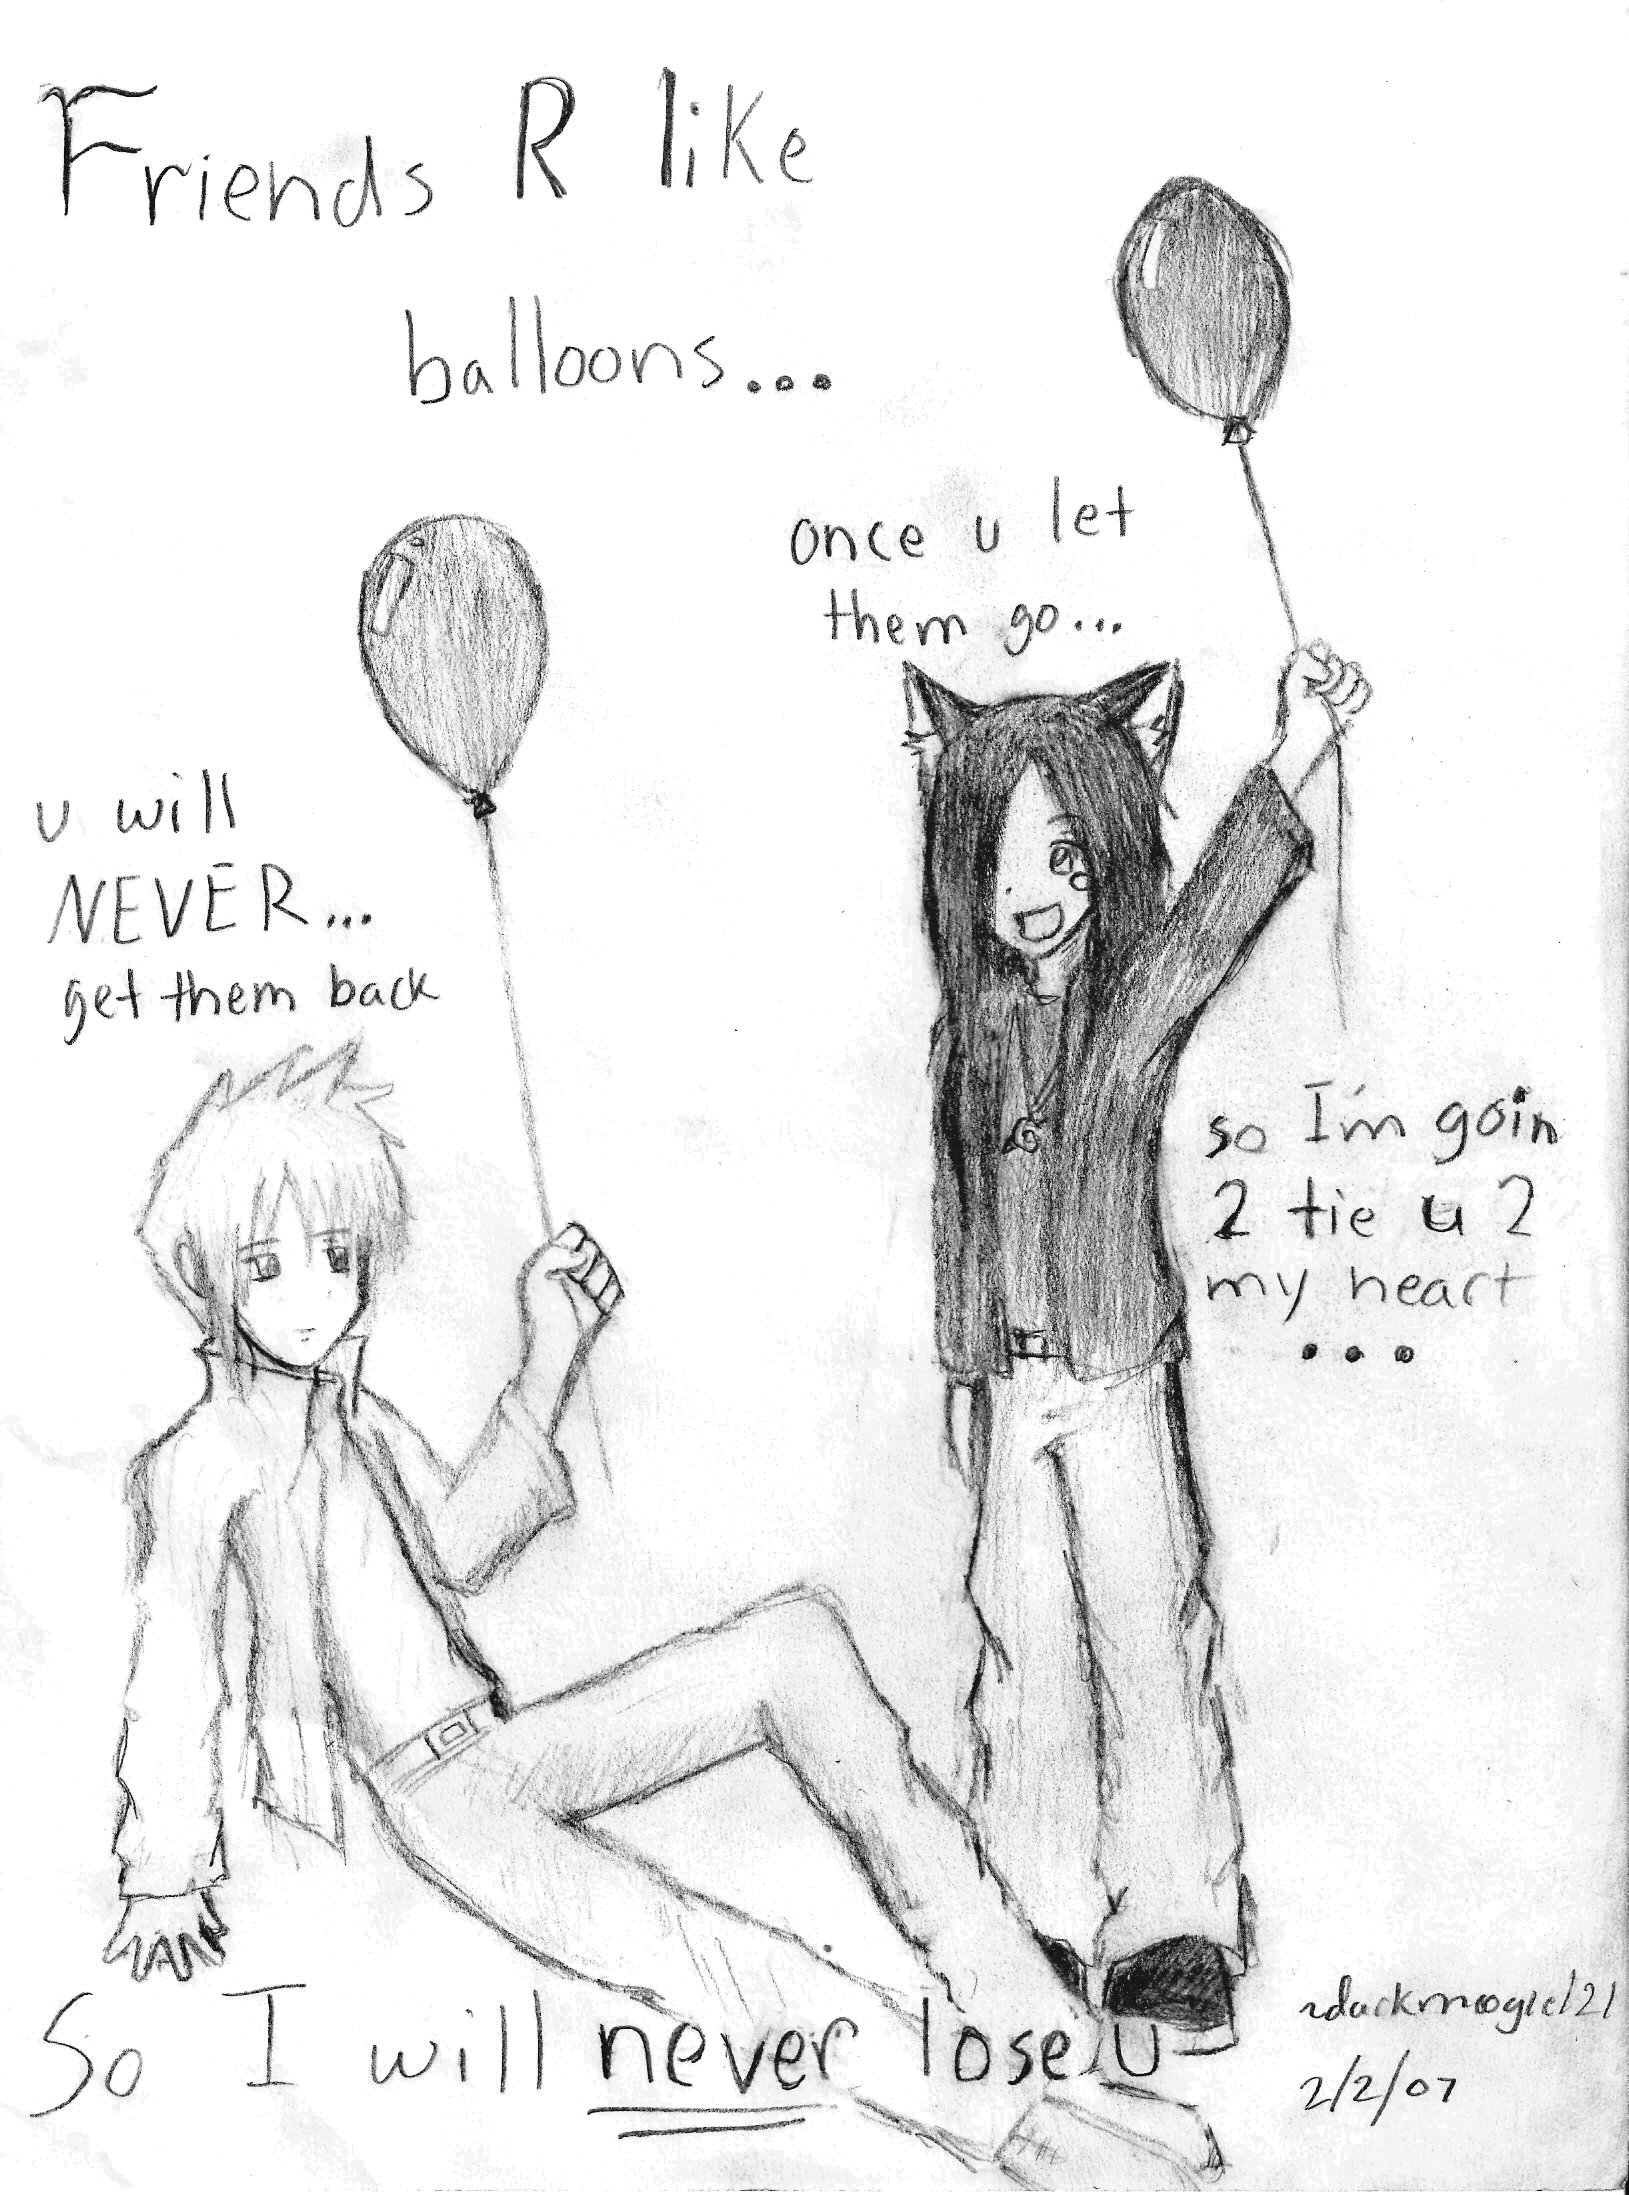 Friends R like balloons by darkmoogle121